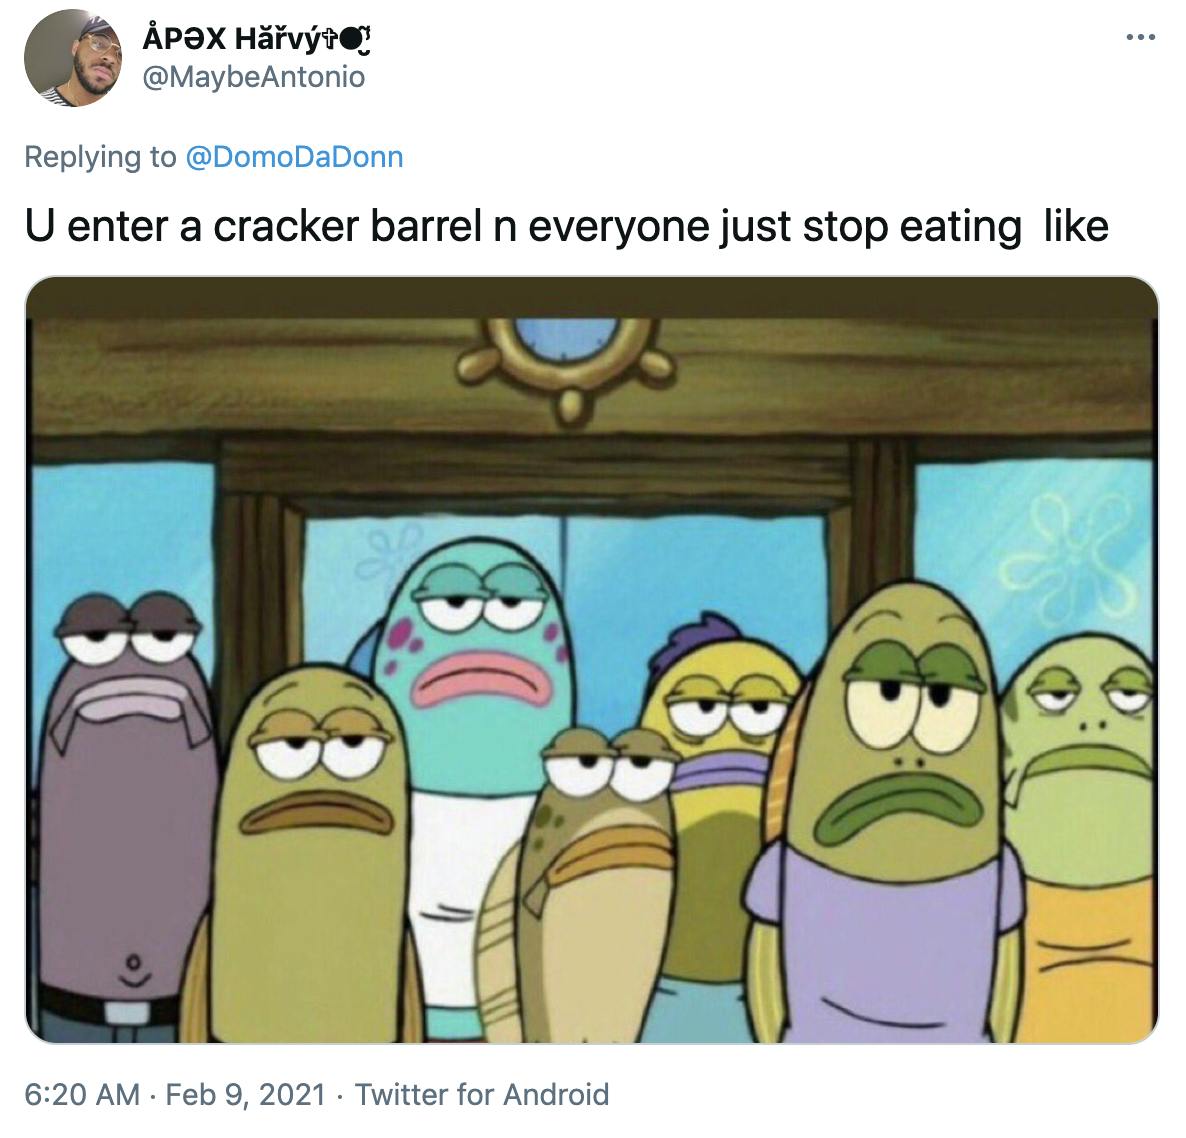 'U enter a cracker barrel n everyone just stop eating like' screen grab from Spongebob Squarepants showing a group of deadpan staring fish